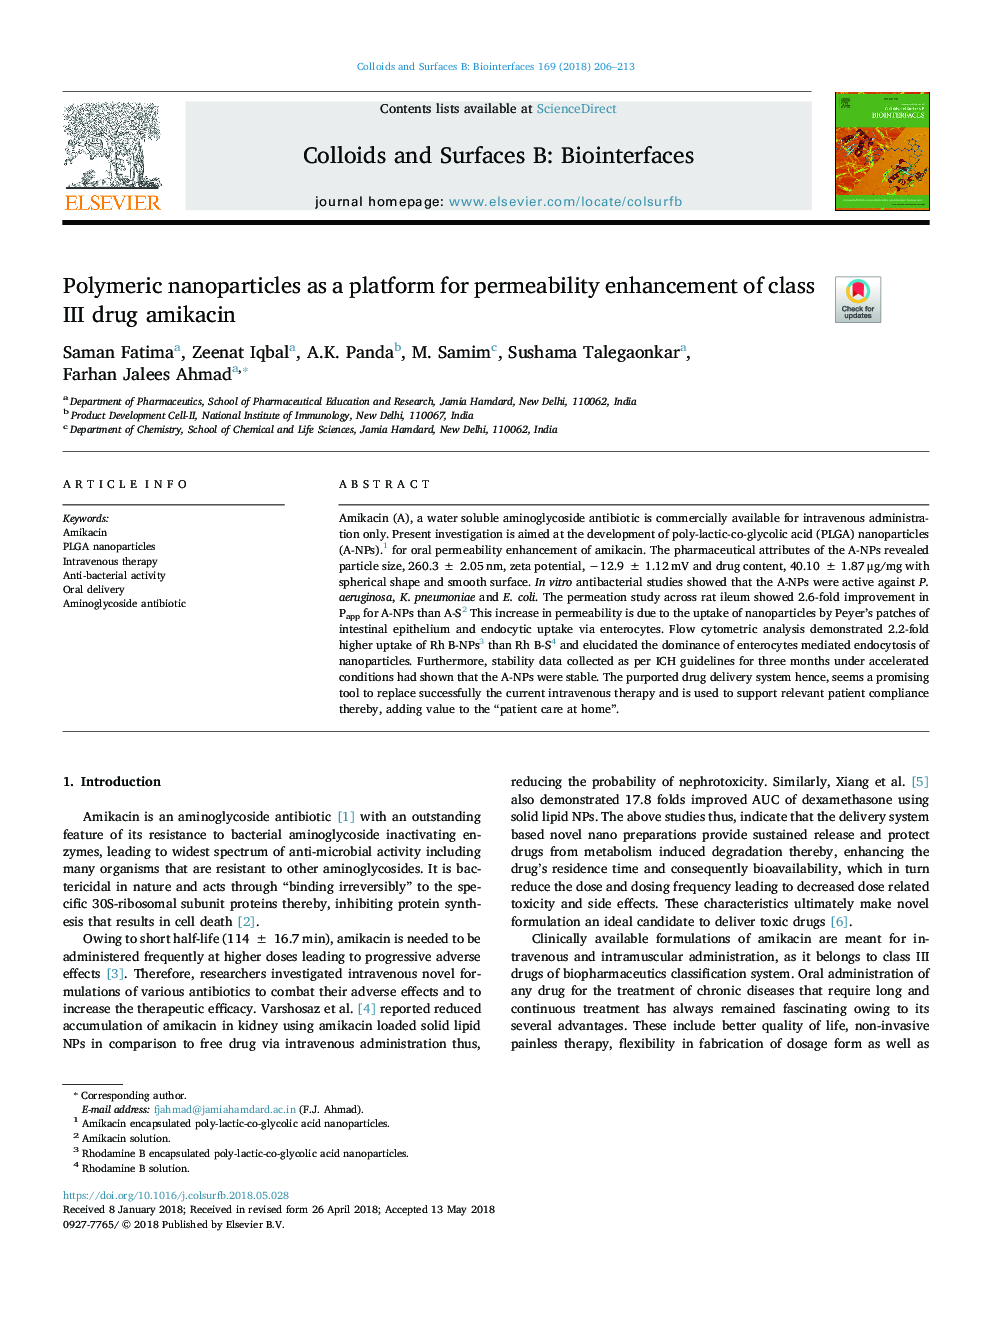 Polymeric nanoparticles as a platform for permeability enhancement of class III drug amikacin